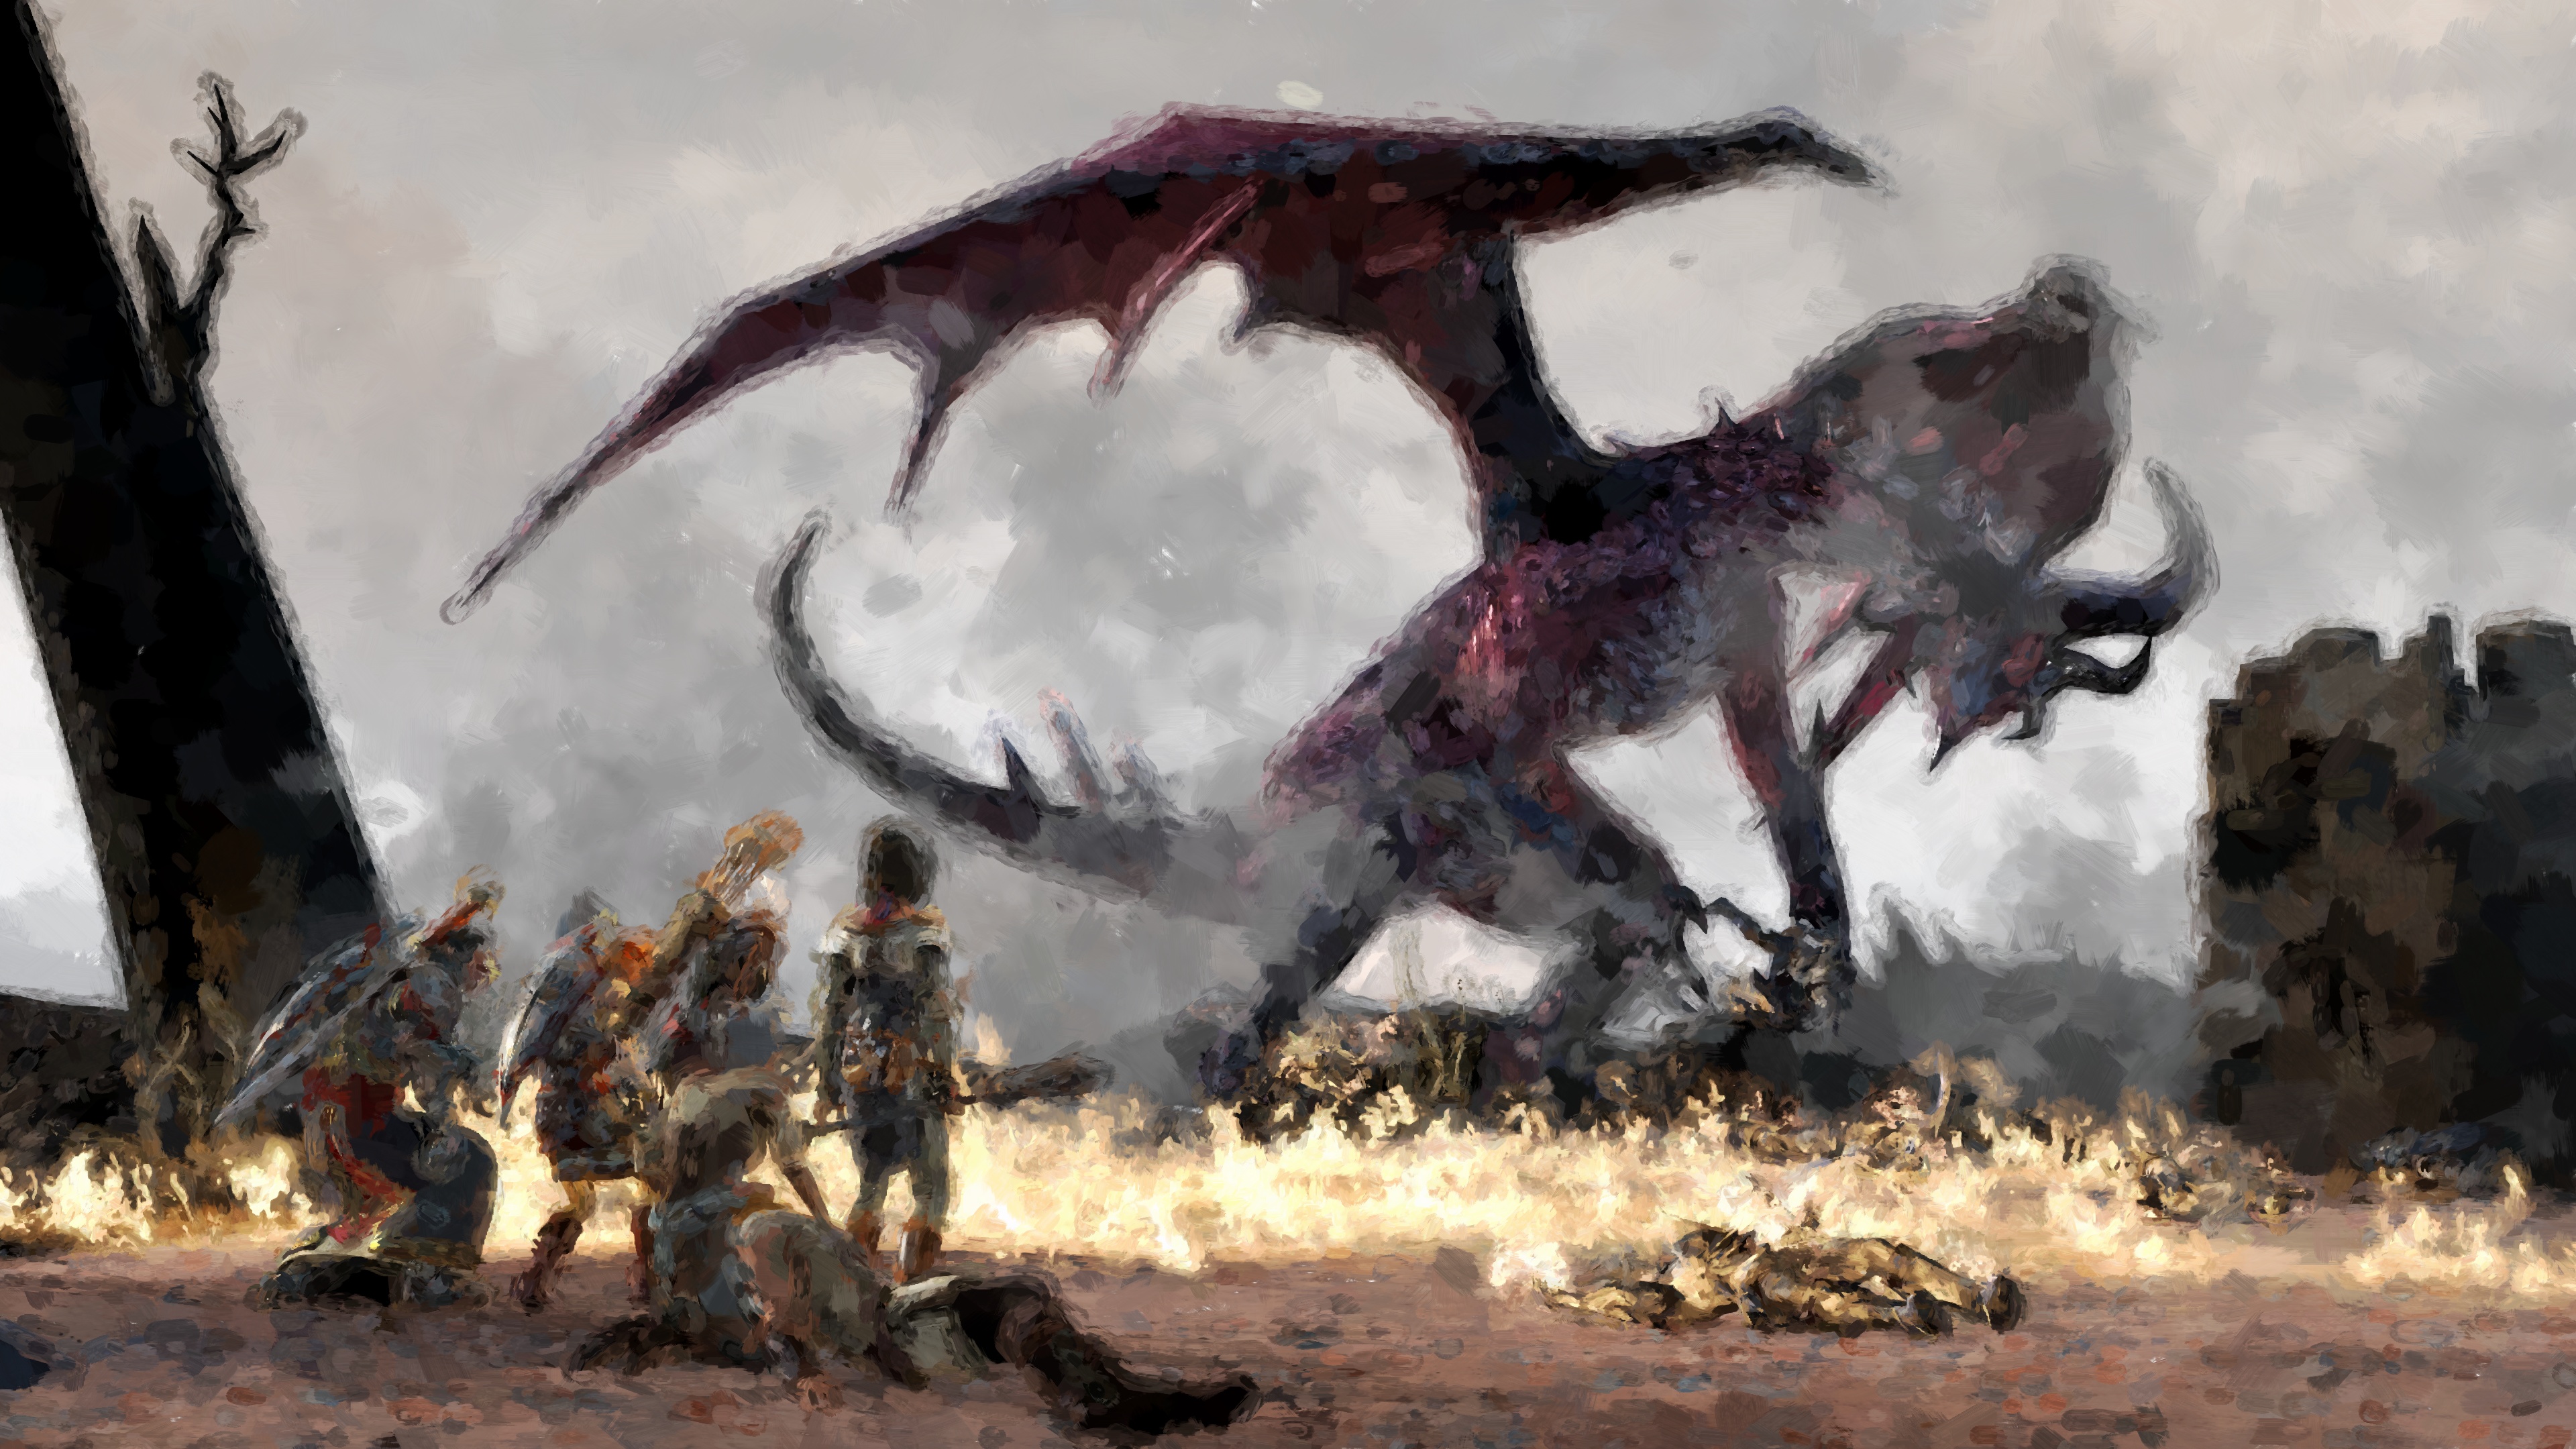 Dragon Age II 4k Ultra HD Wallpaper